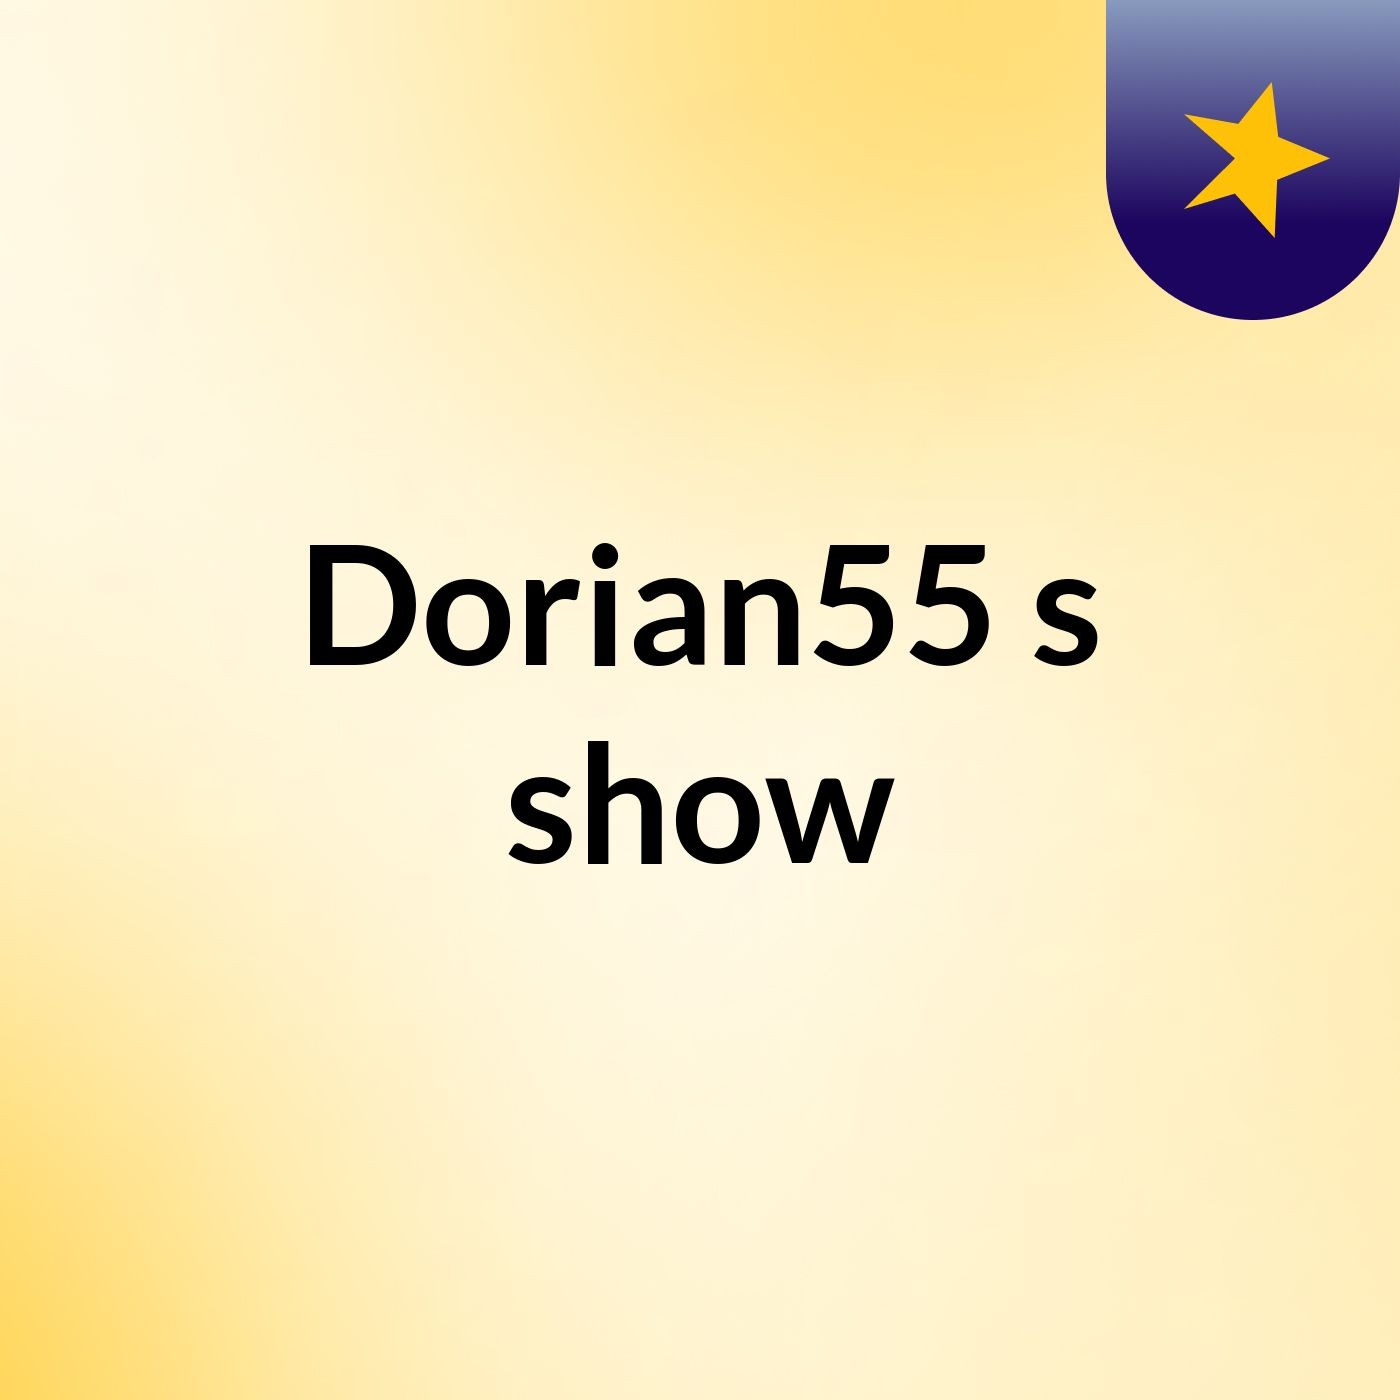 Dorian55's show